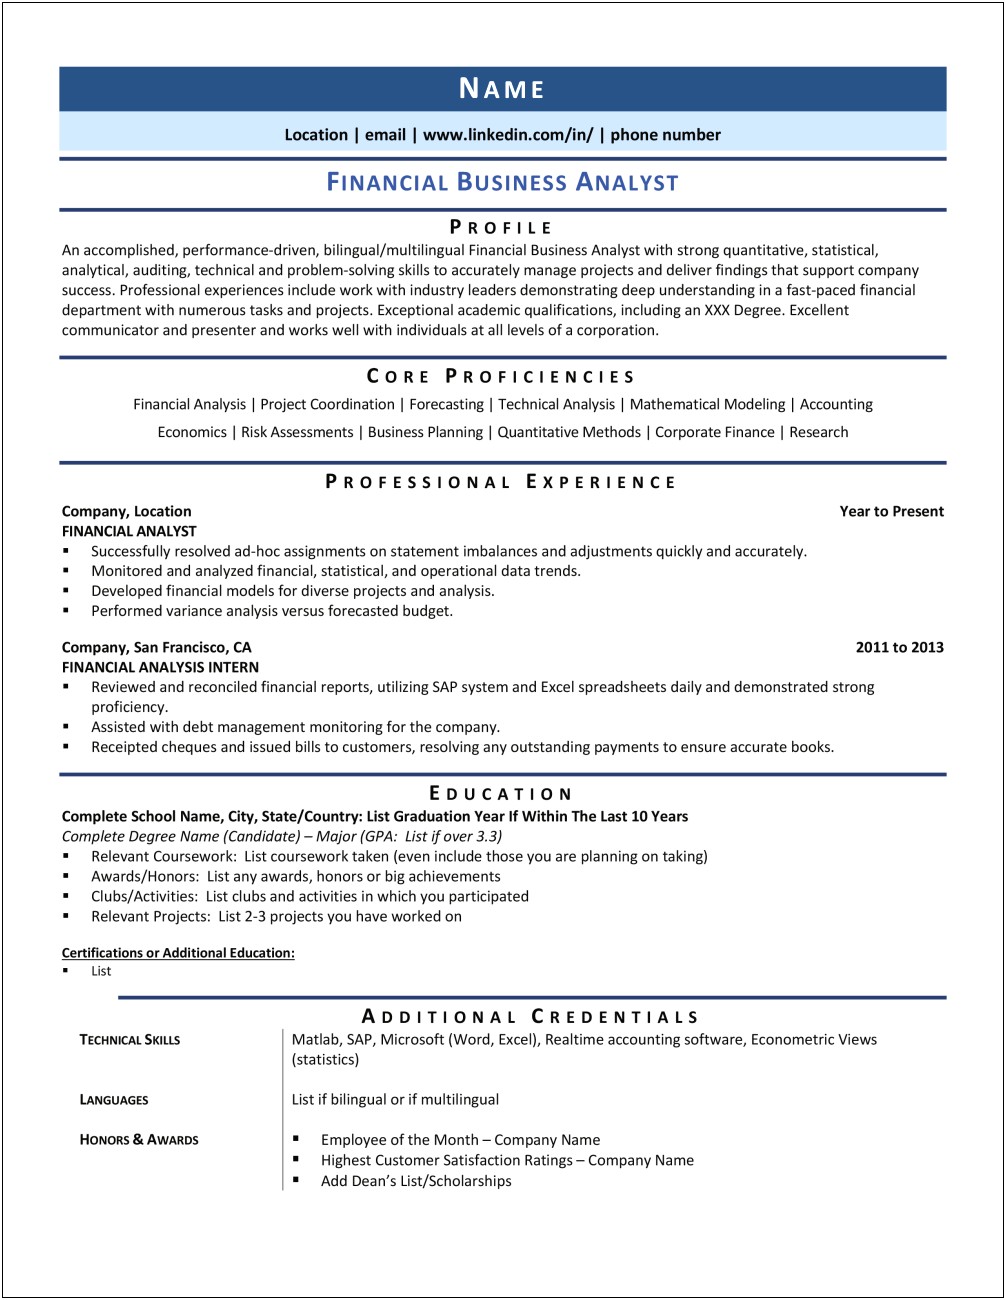 Finance Business Analyst Resume Sample